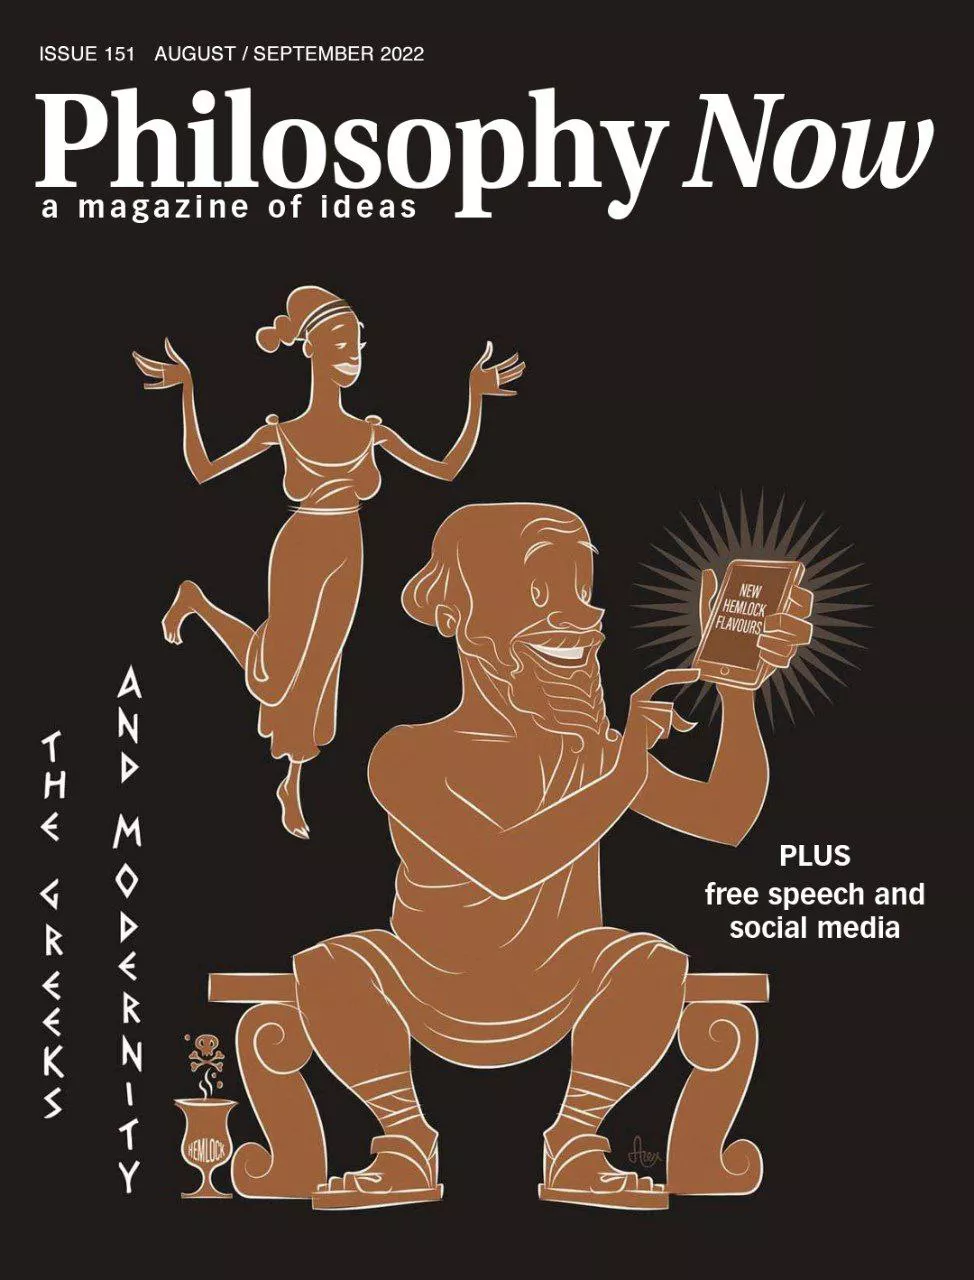 Philosophy Now - August_September 2022 (philosophy)